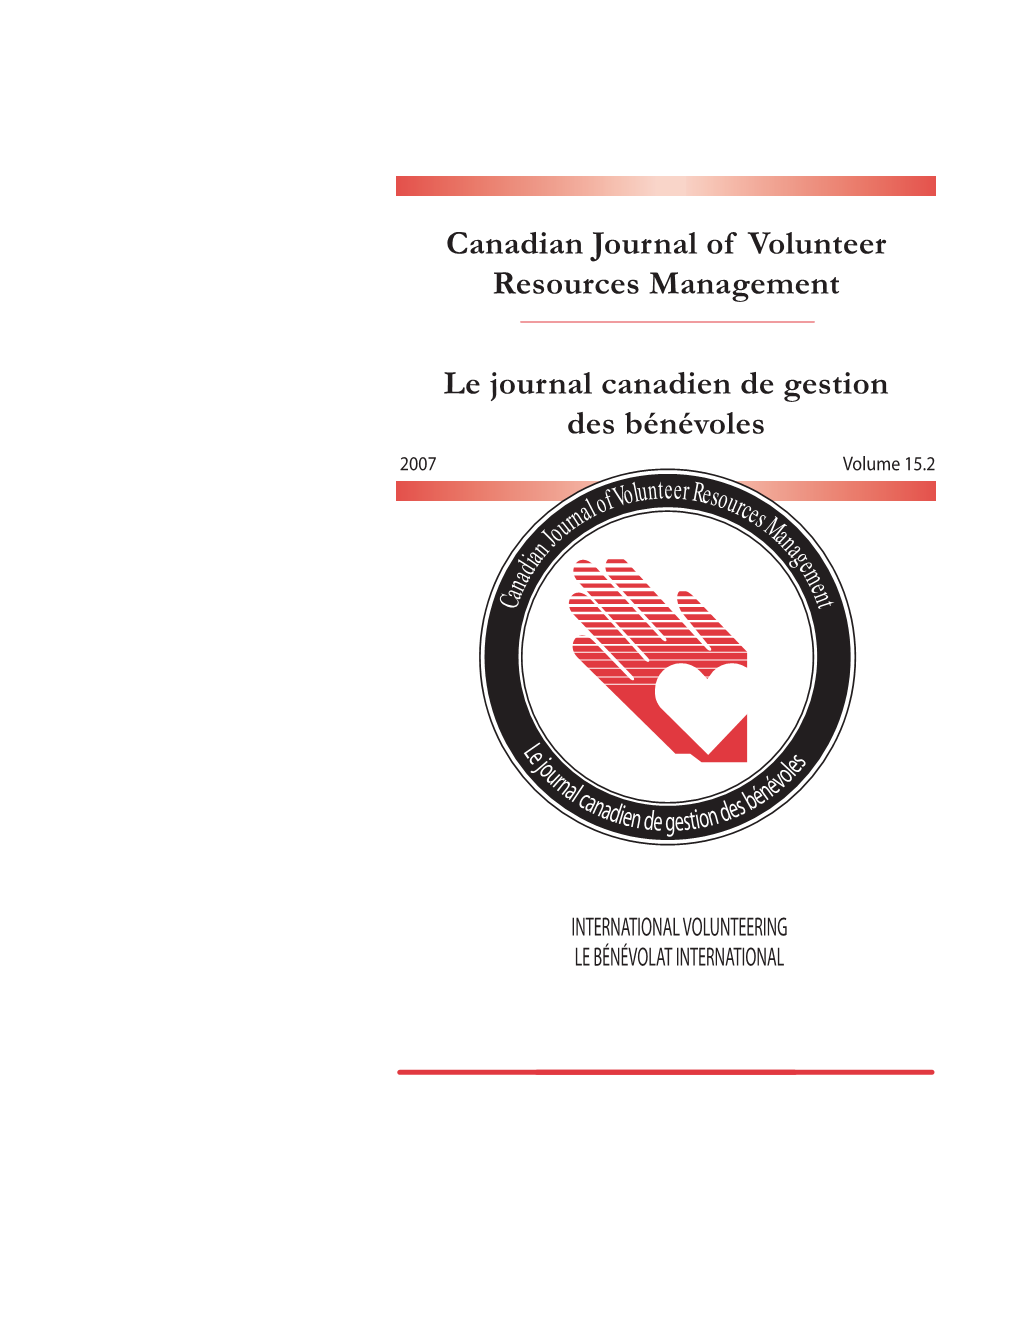 Canadian Journal of Volunteer Resources Management Le Journal